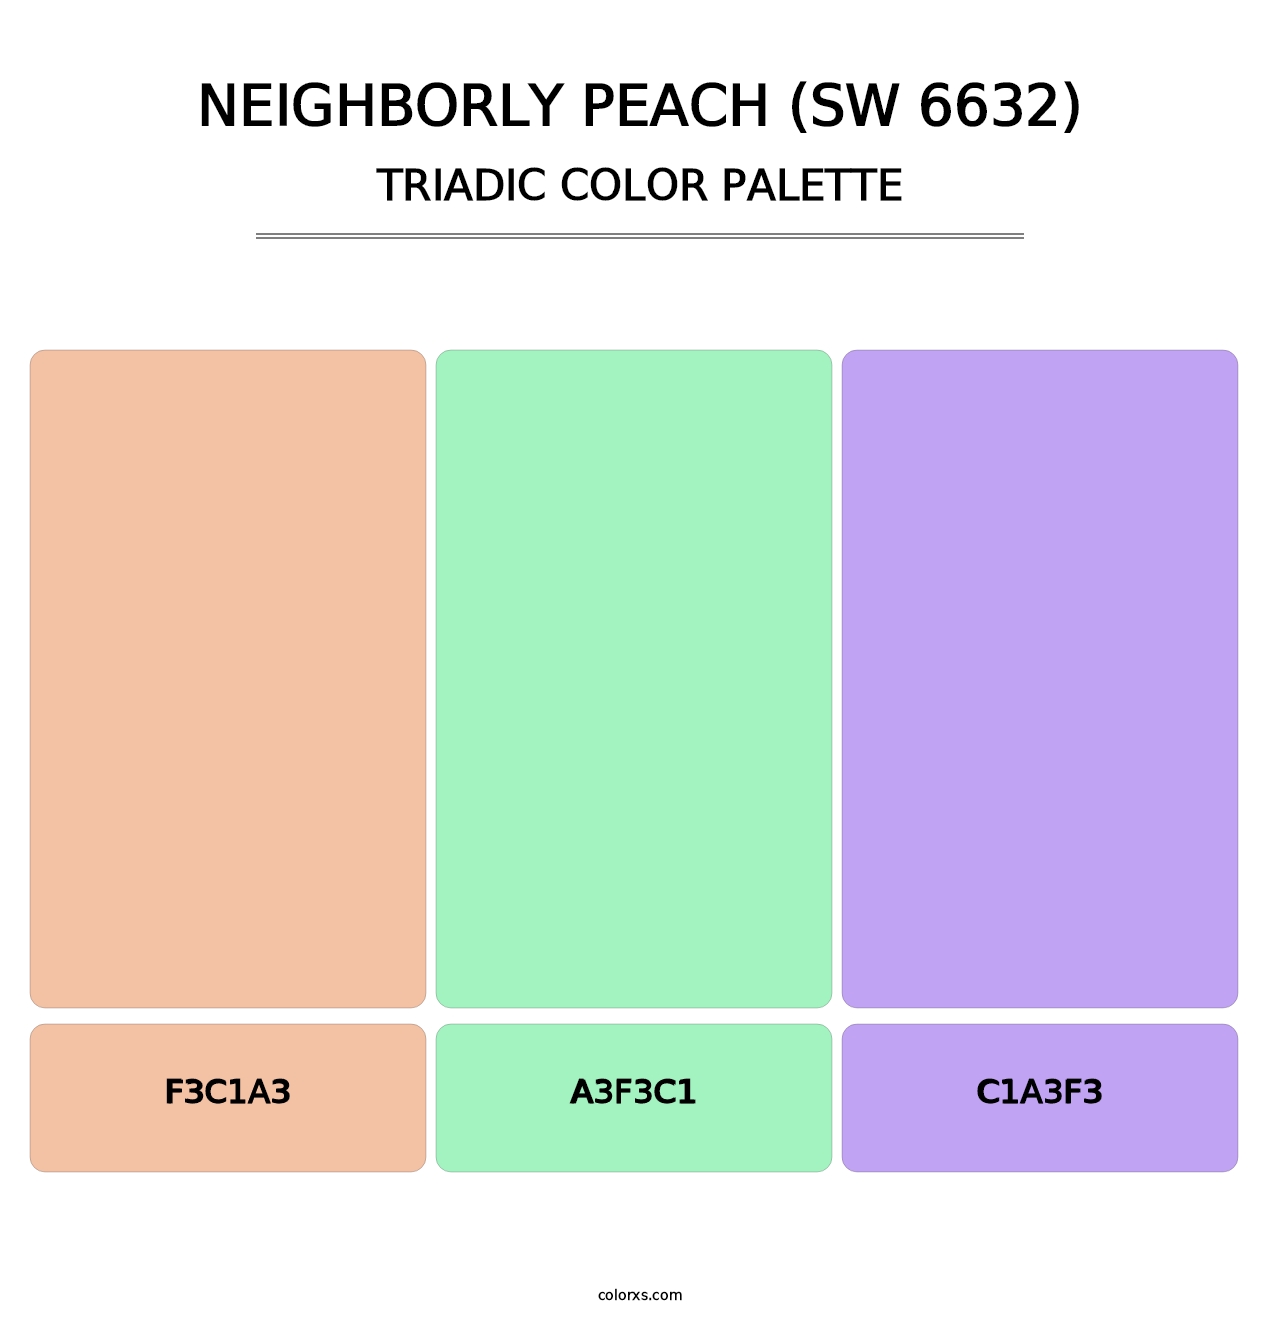 Neighborly Peach (SW 6632) - Triadic Color Palette